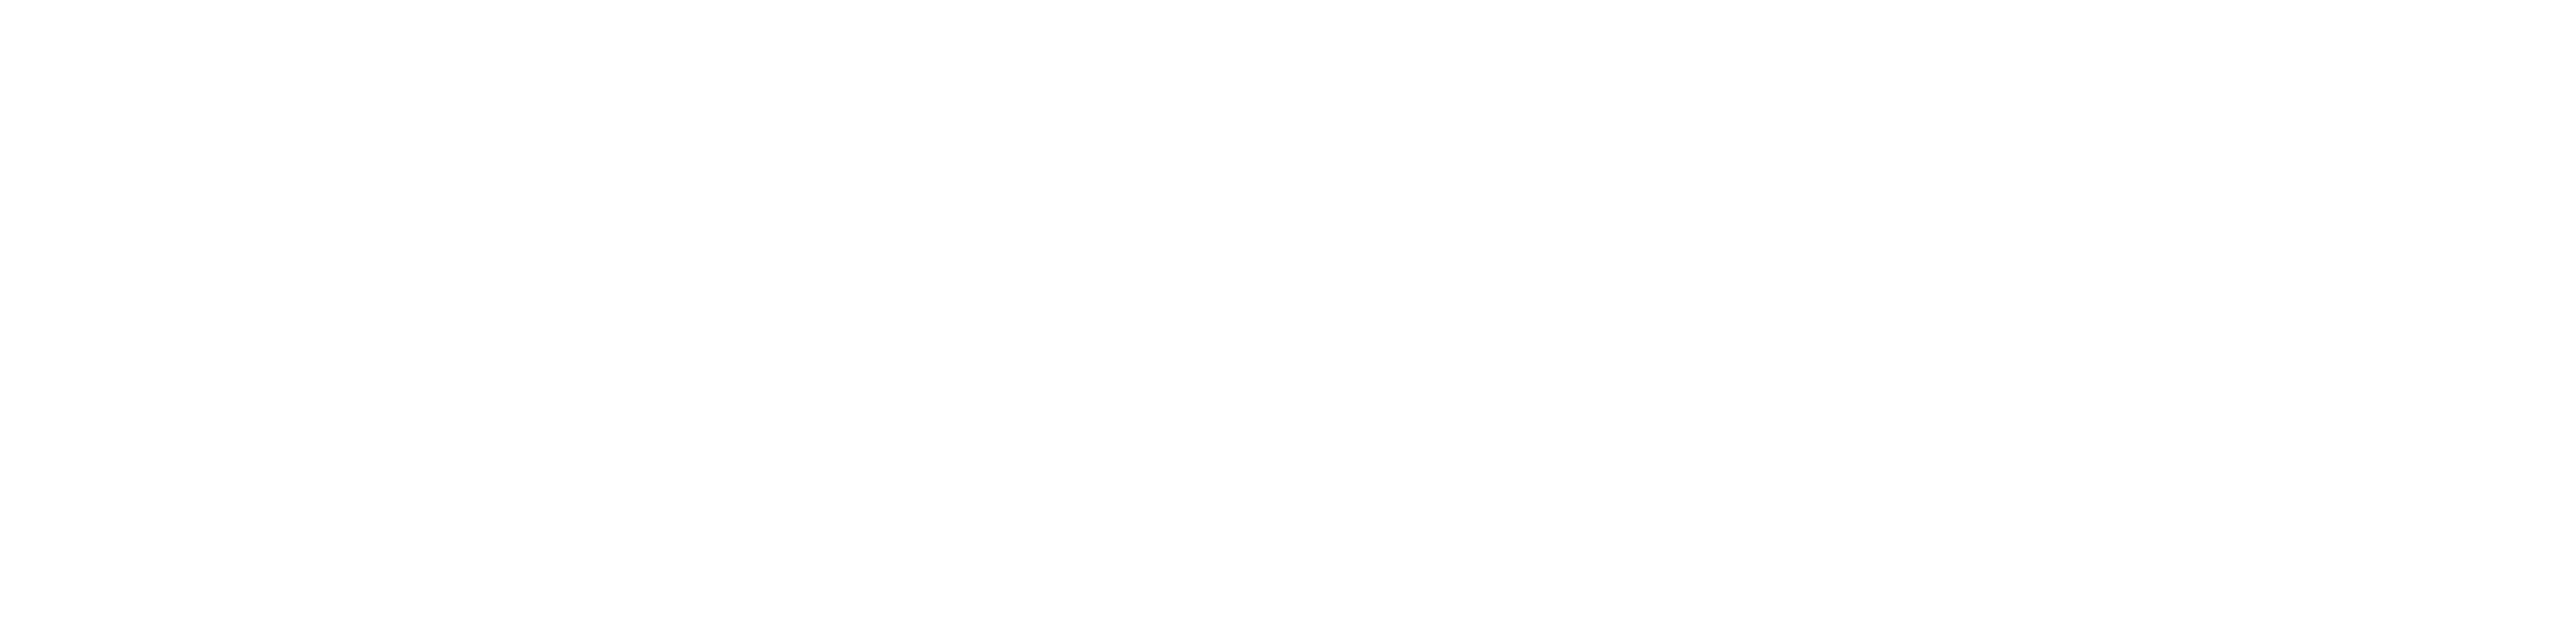 Value 4